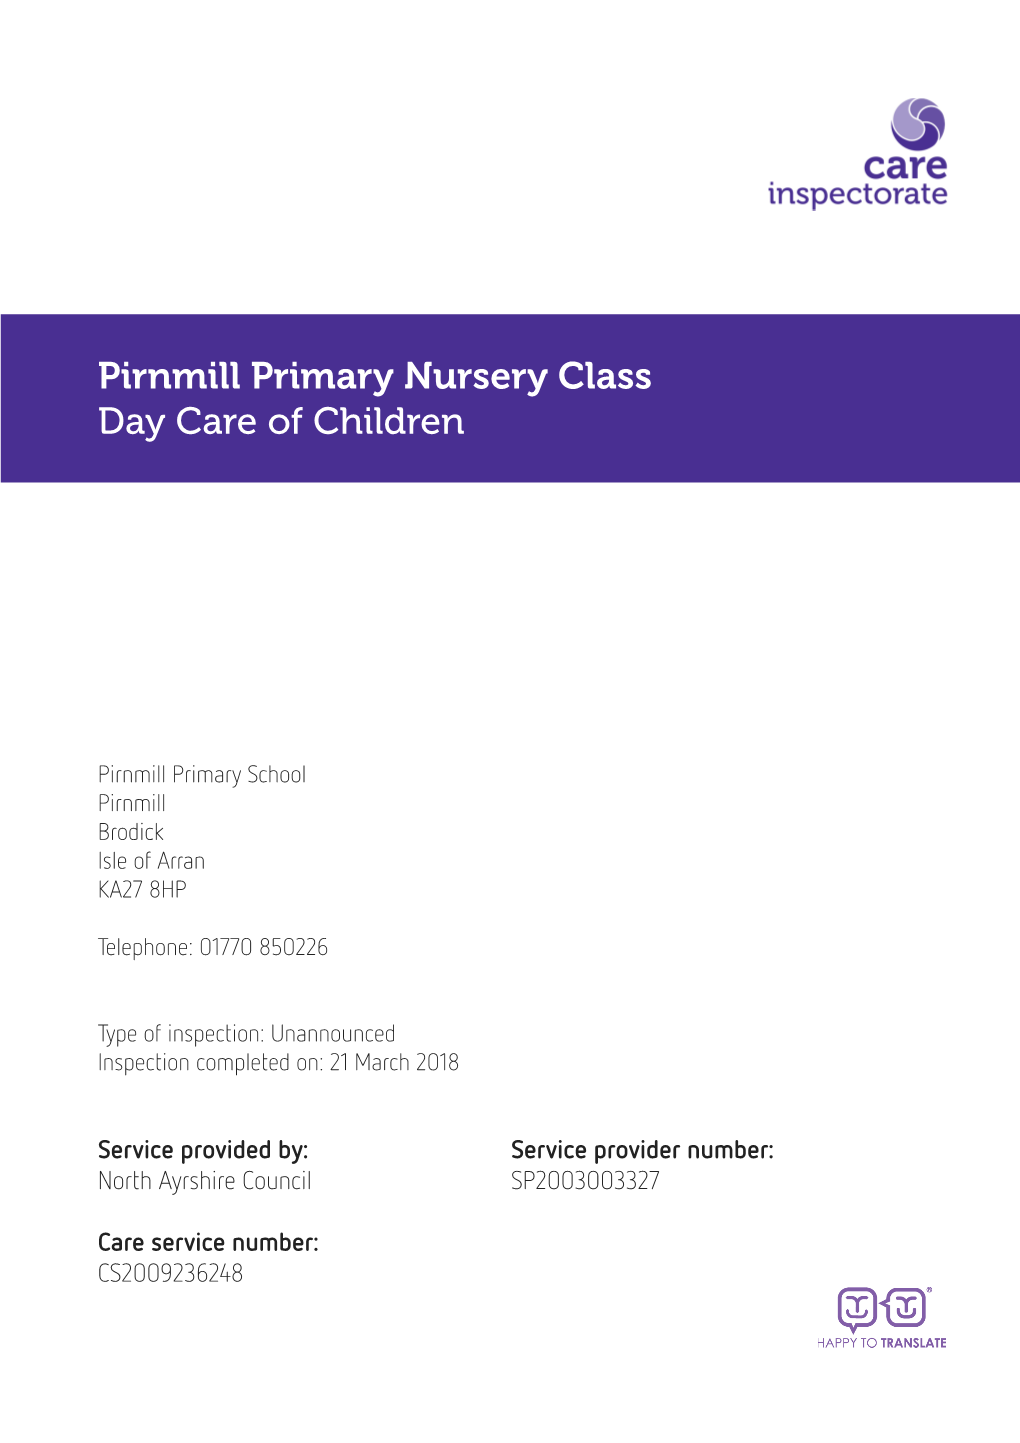 Pirnmill Primary Nursery Class Day Care of Children